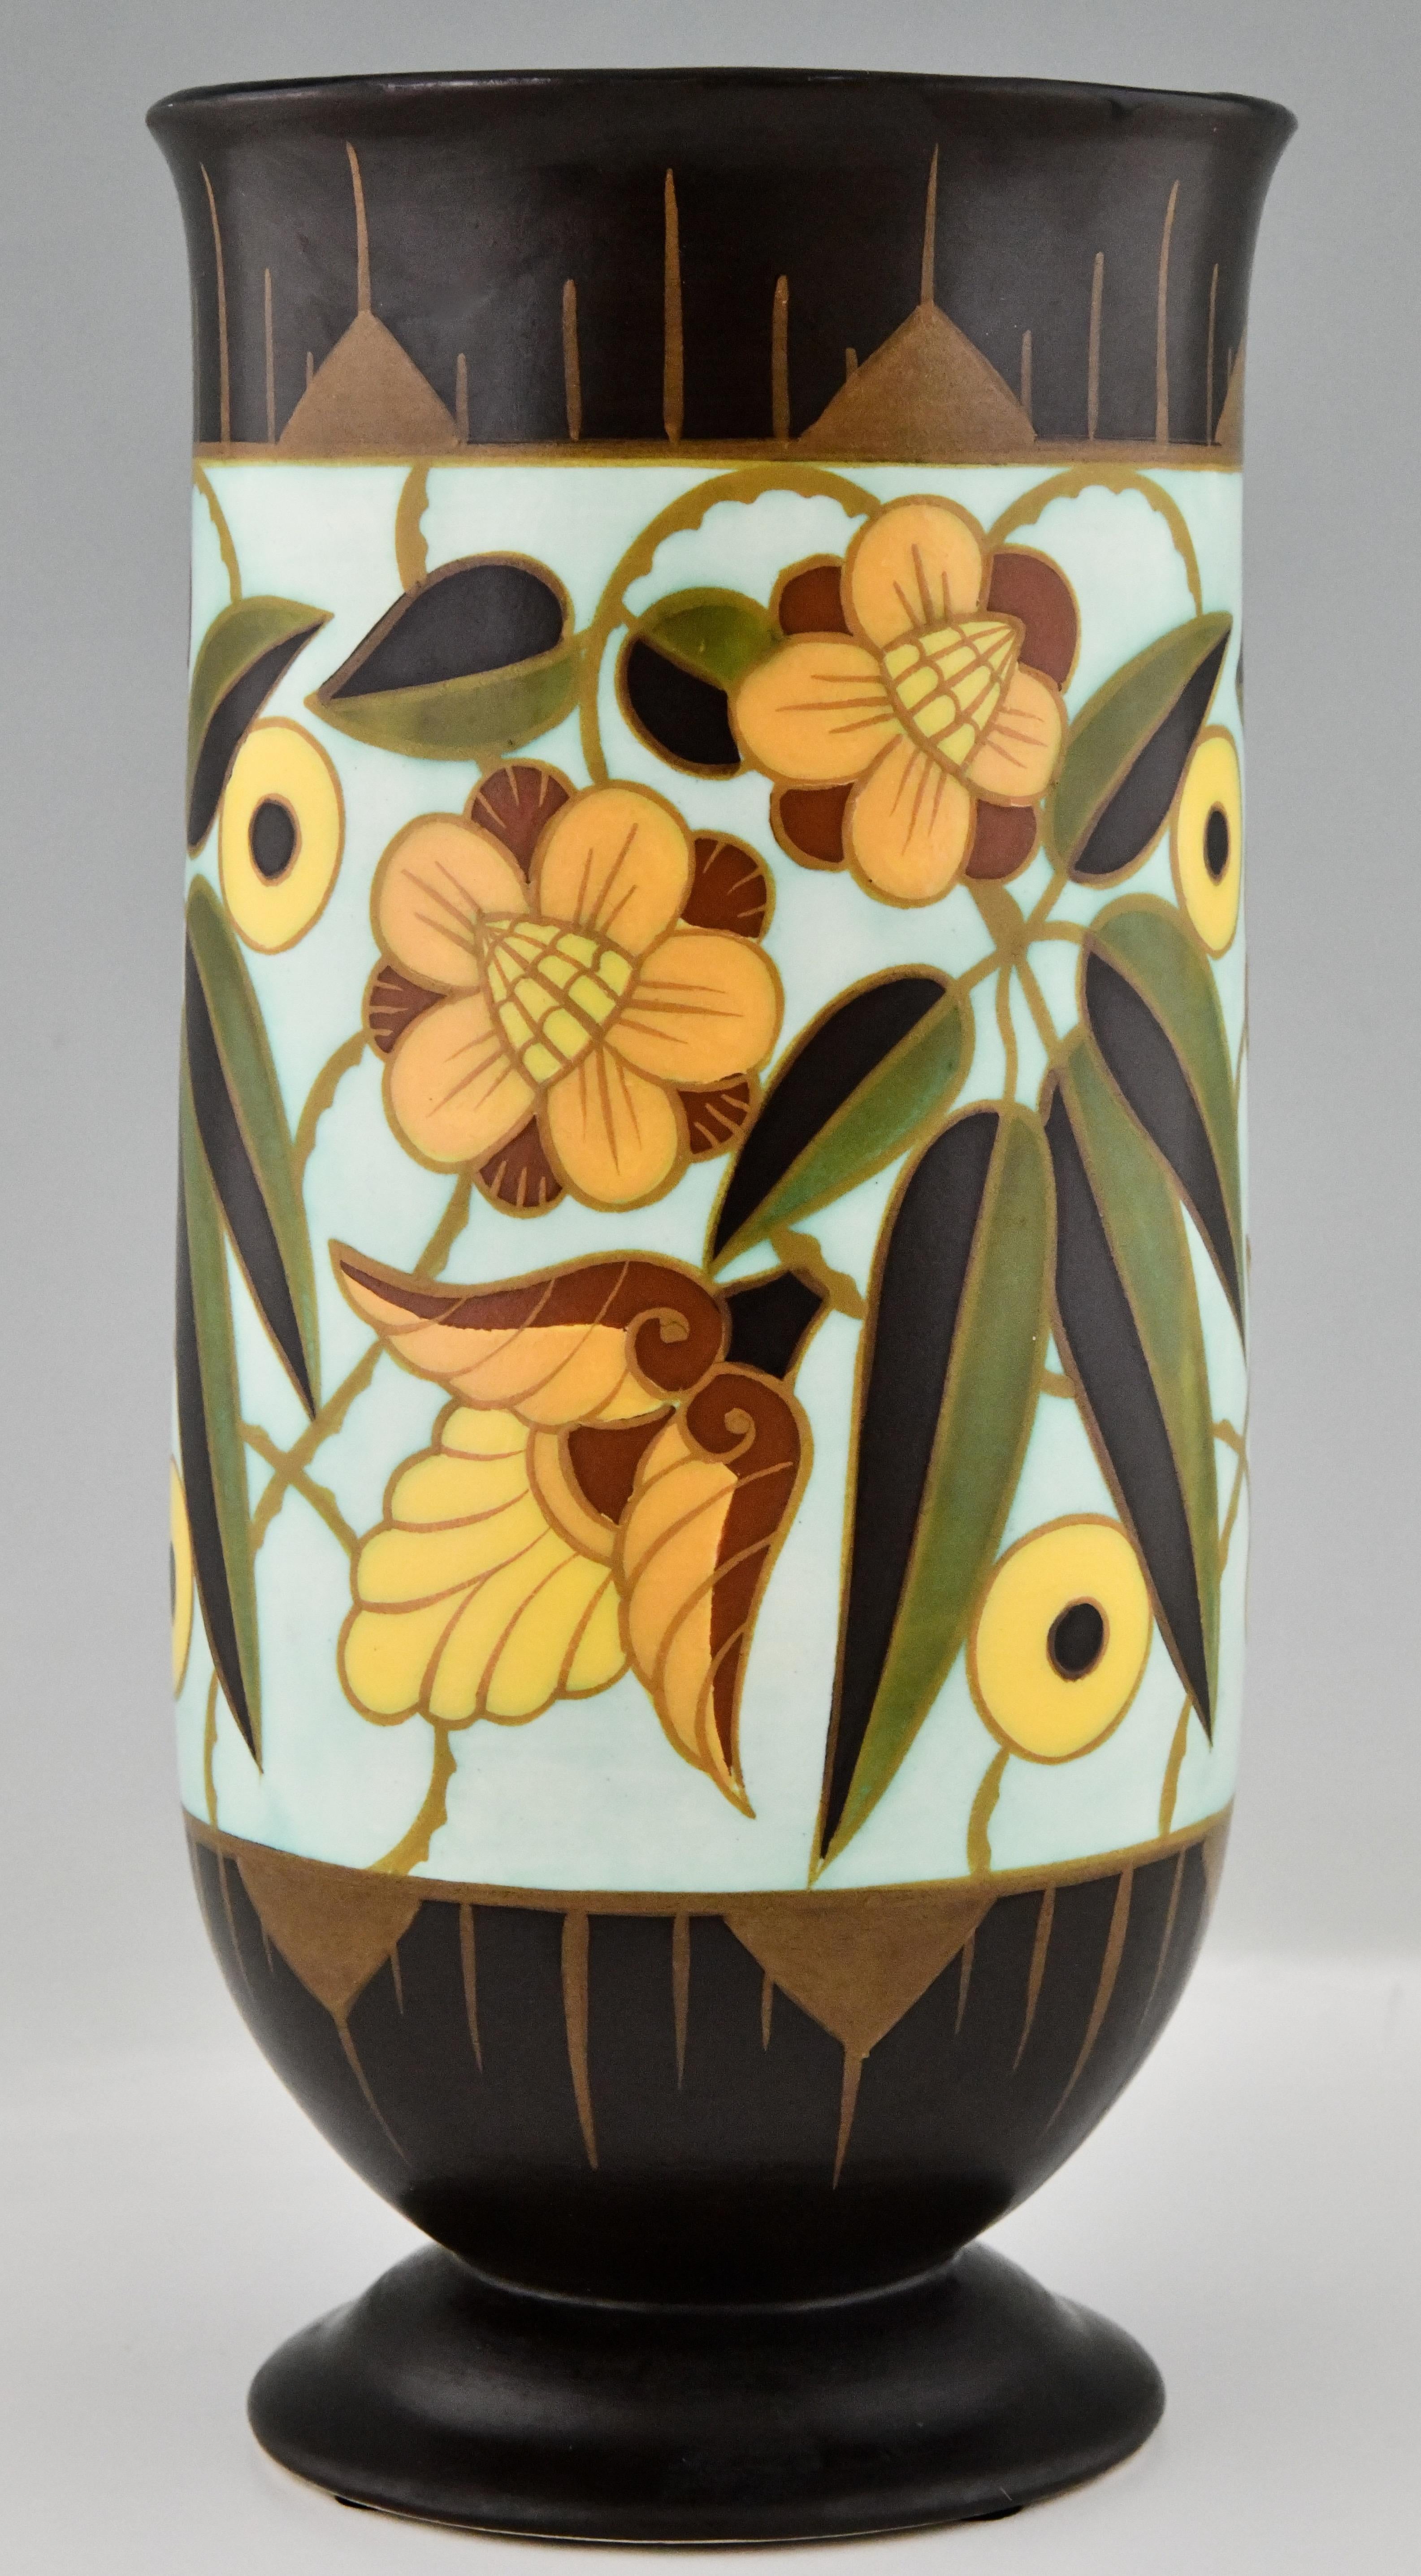 Ceramic Art Deco ceramic vase with flowers by Boch Frères, Keramis 1934